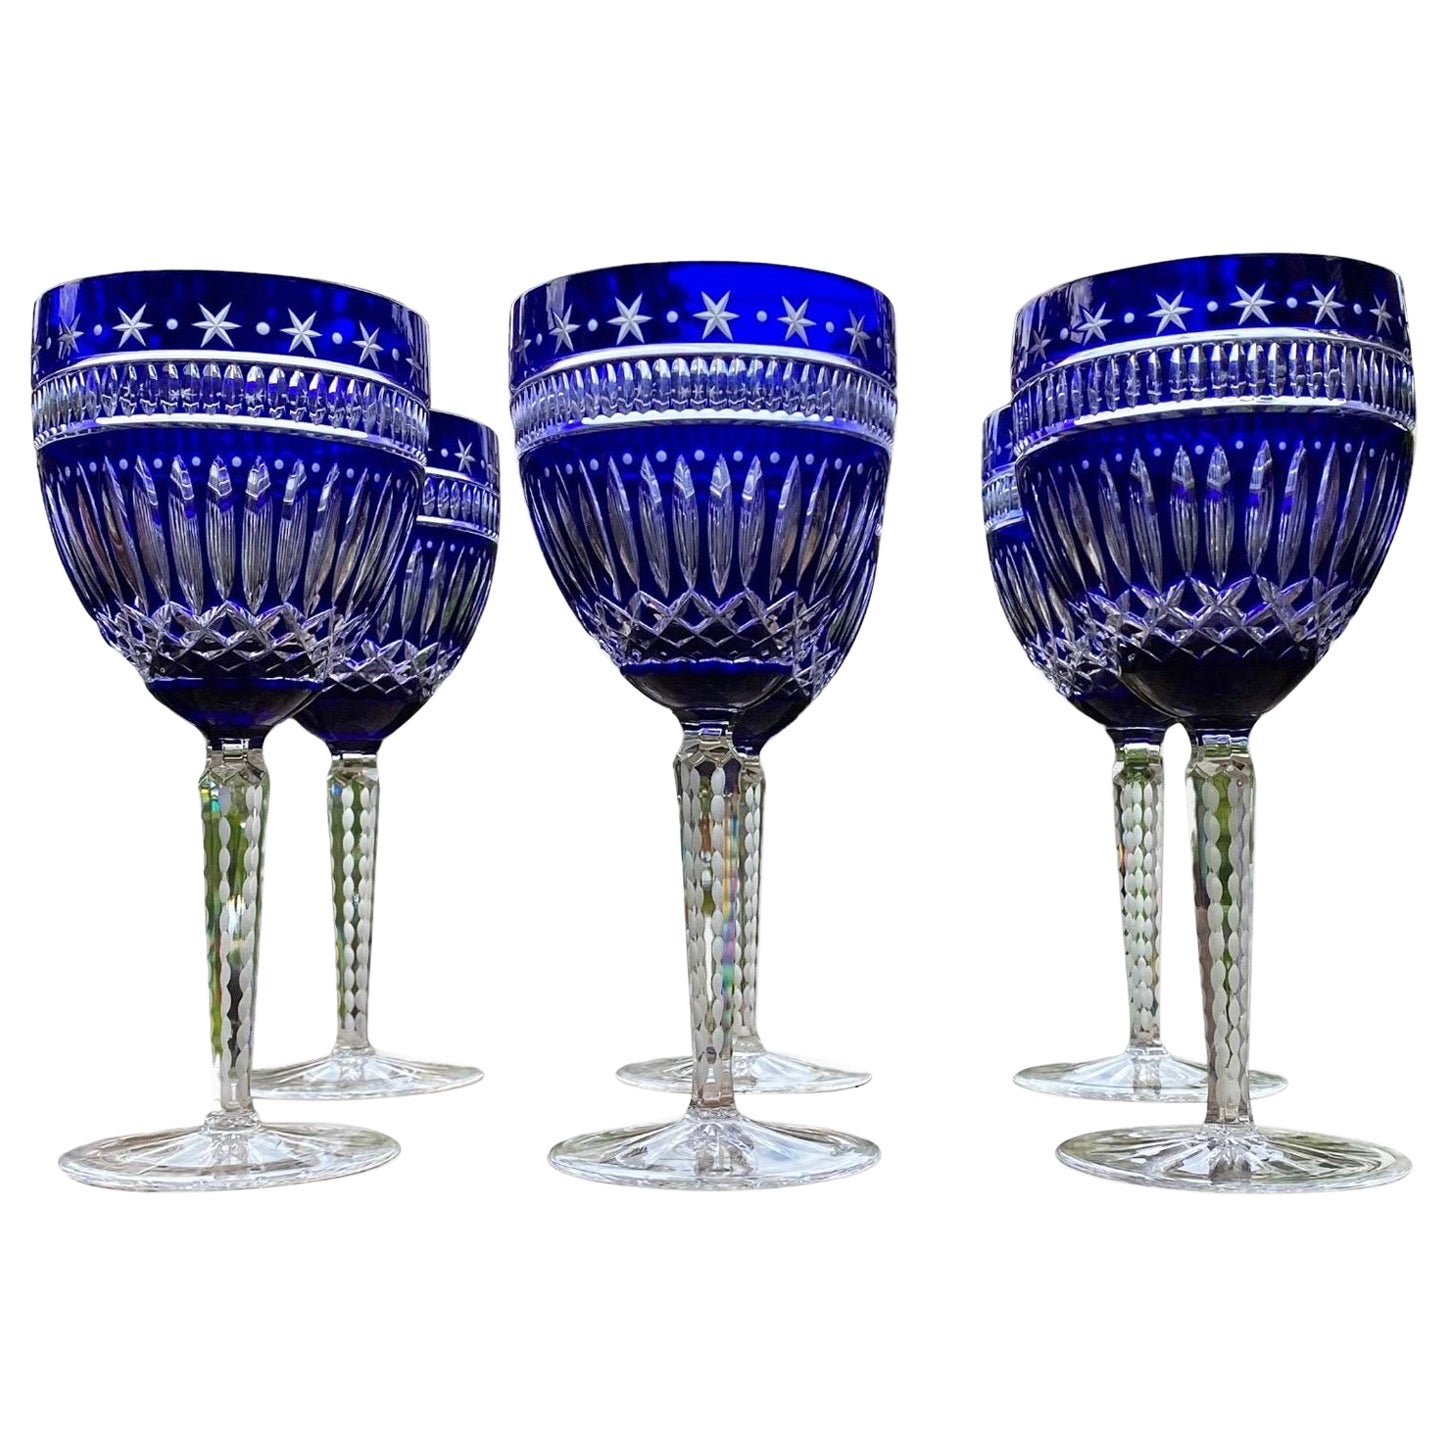 Six verres à vin Ajka Serenity bleu cobalt étoilé taillés en verre transparent en vente